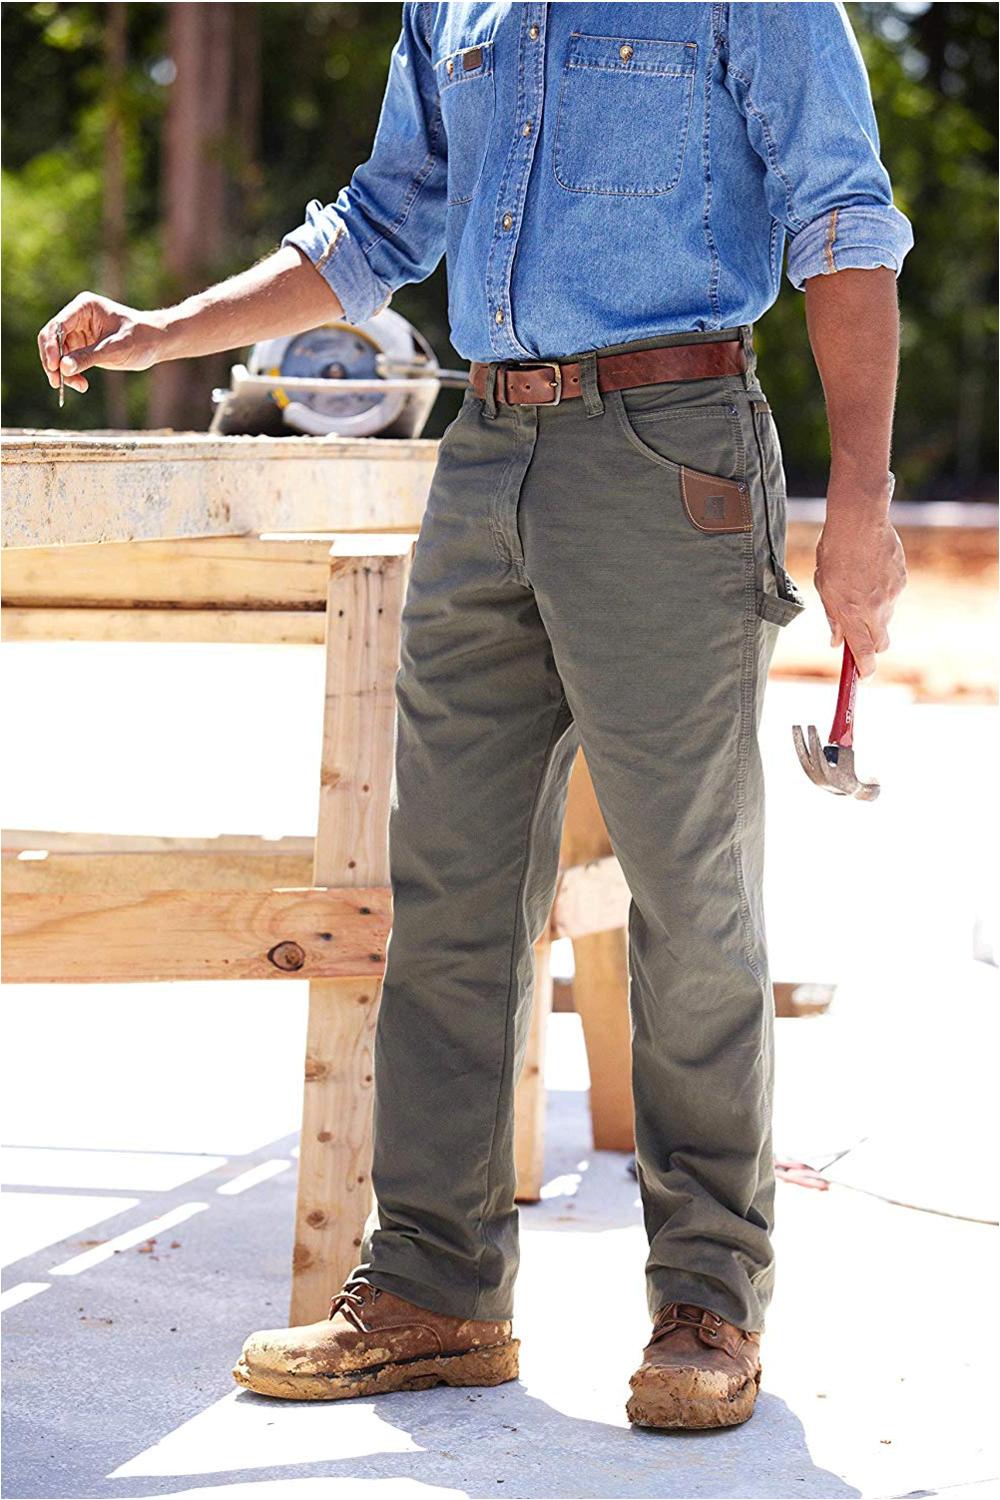 wrangler riggs workwear carpenter jeans